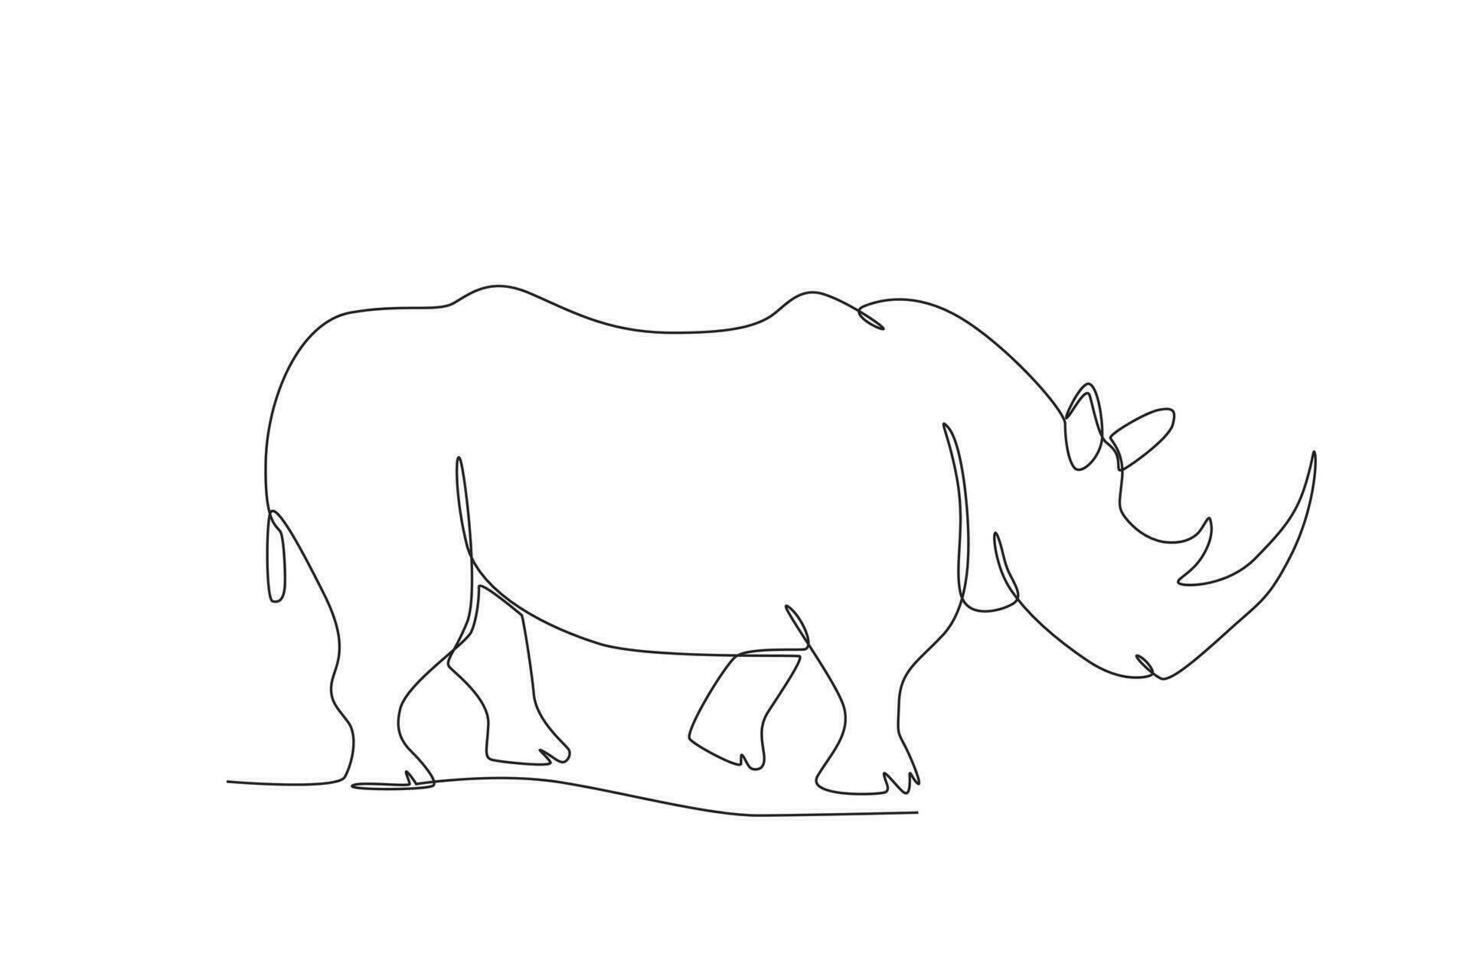 A rhinoceros walking vector